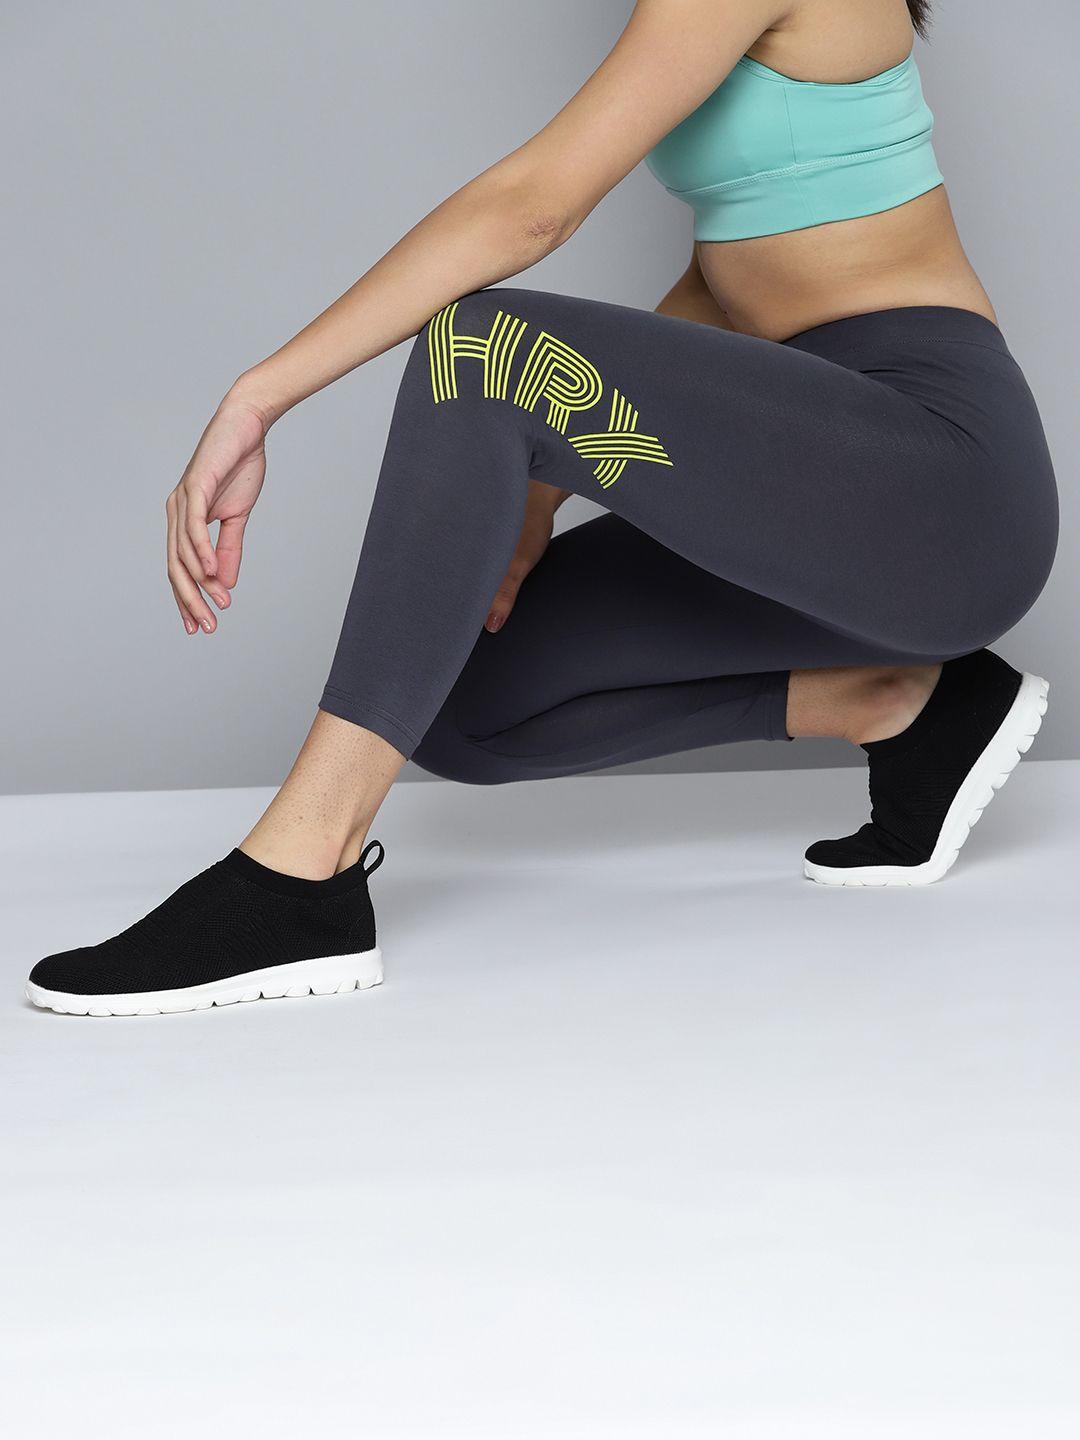 hrx by hrithik roshan women slim-fit lifestyle tights